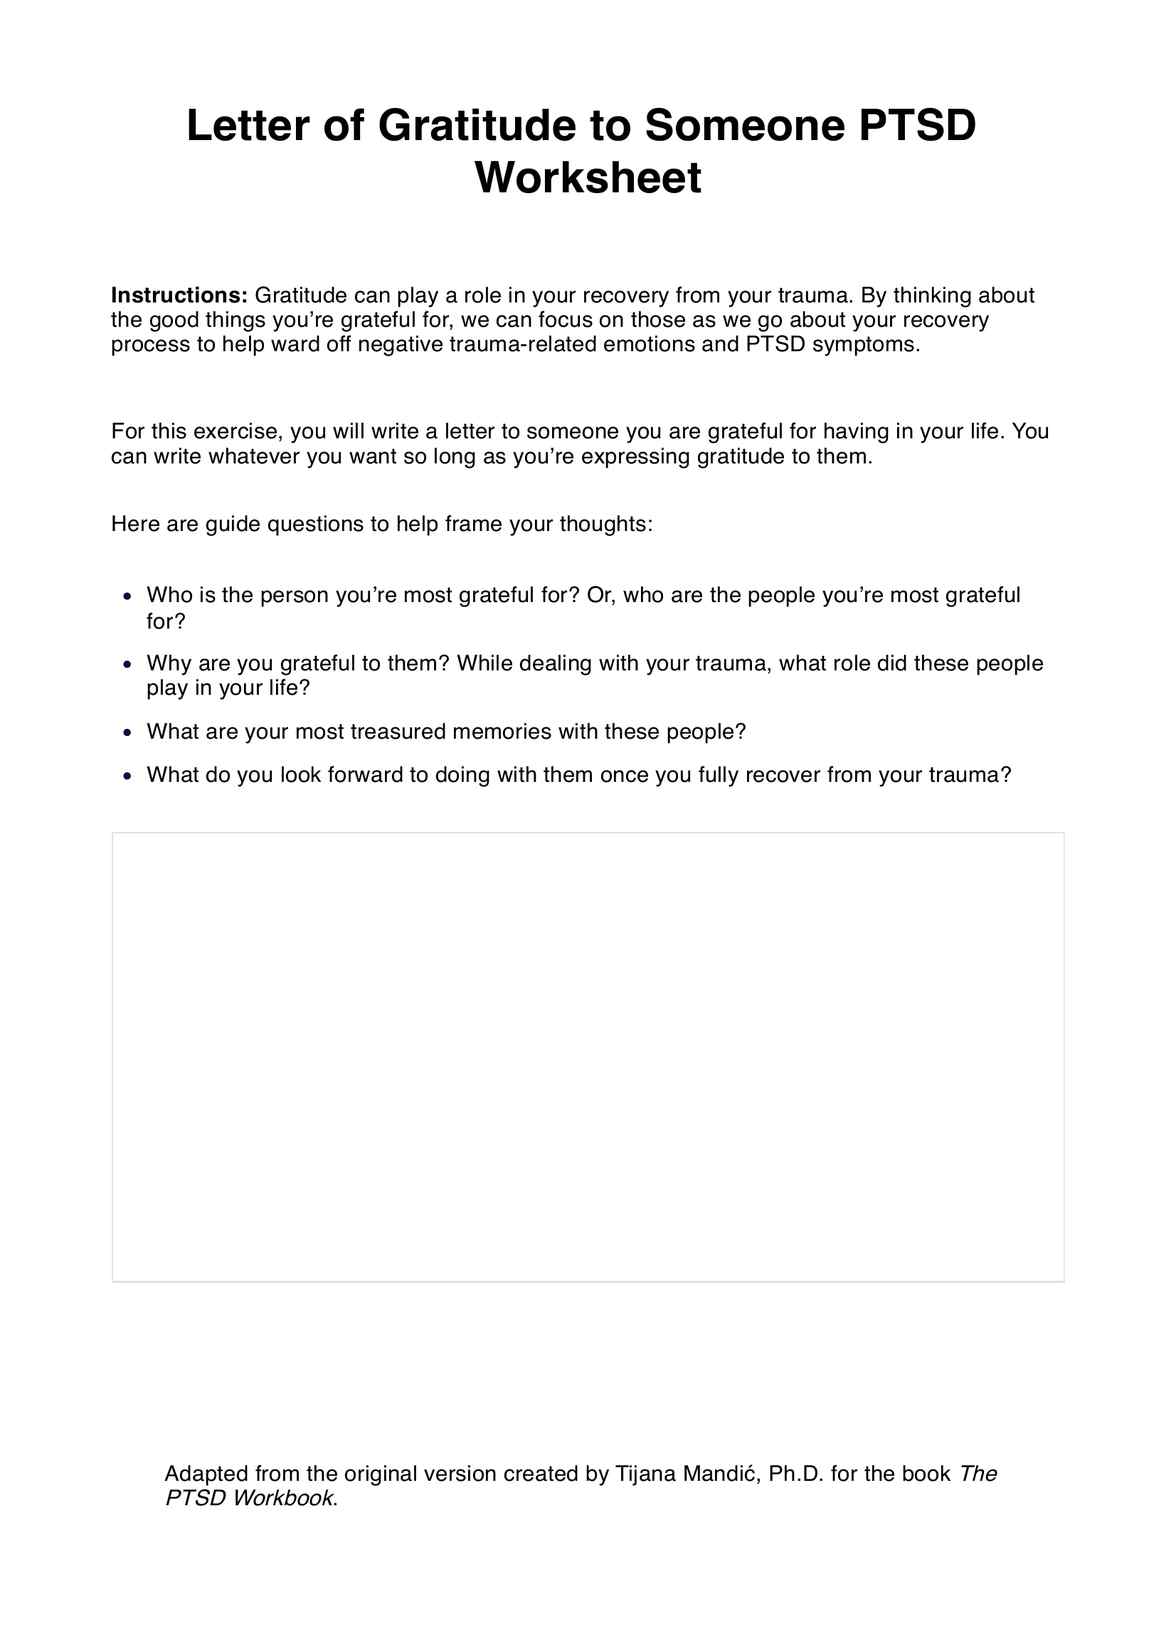 Letter of Gratitude to Someone PTSD Worksheet PDF Example